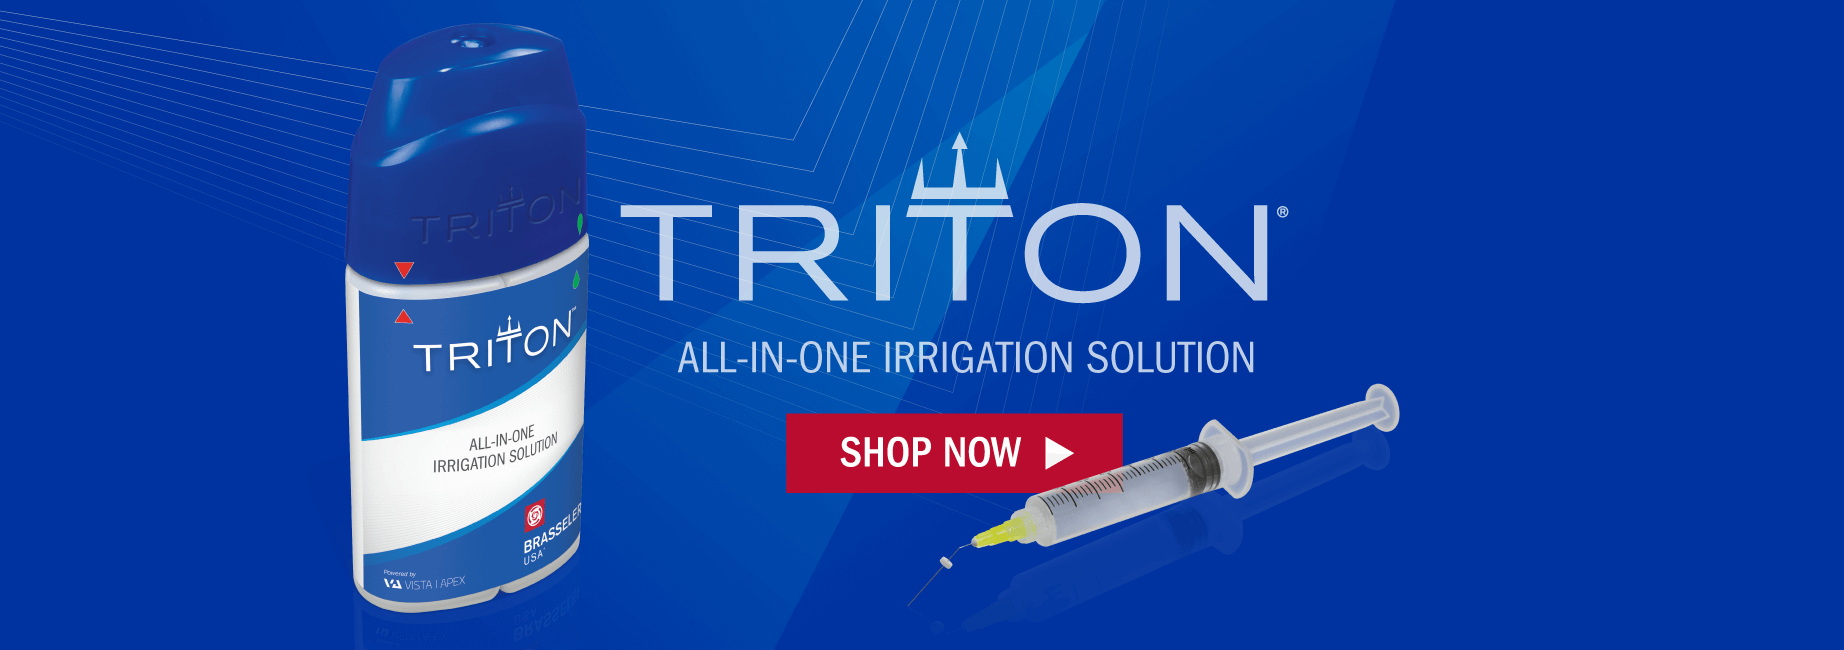 Triton Irrigation Solution